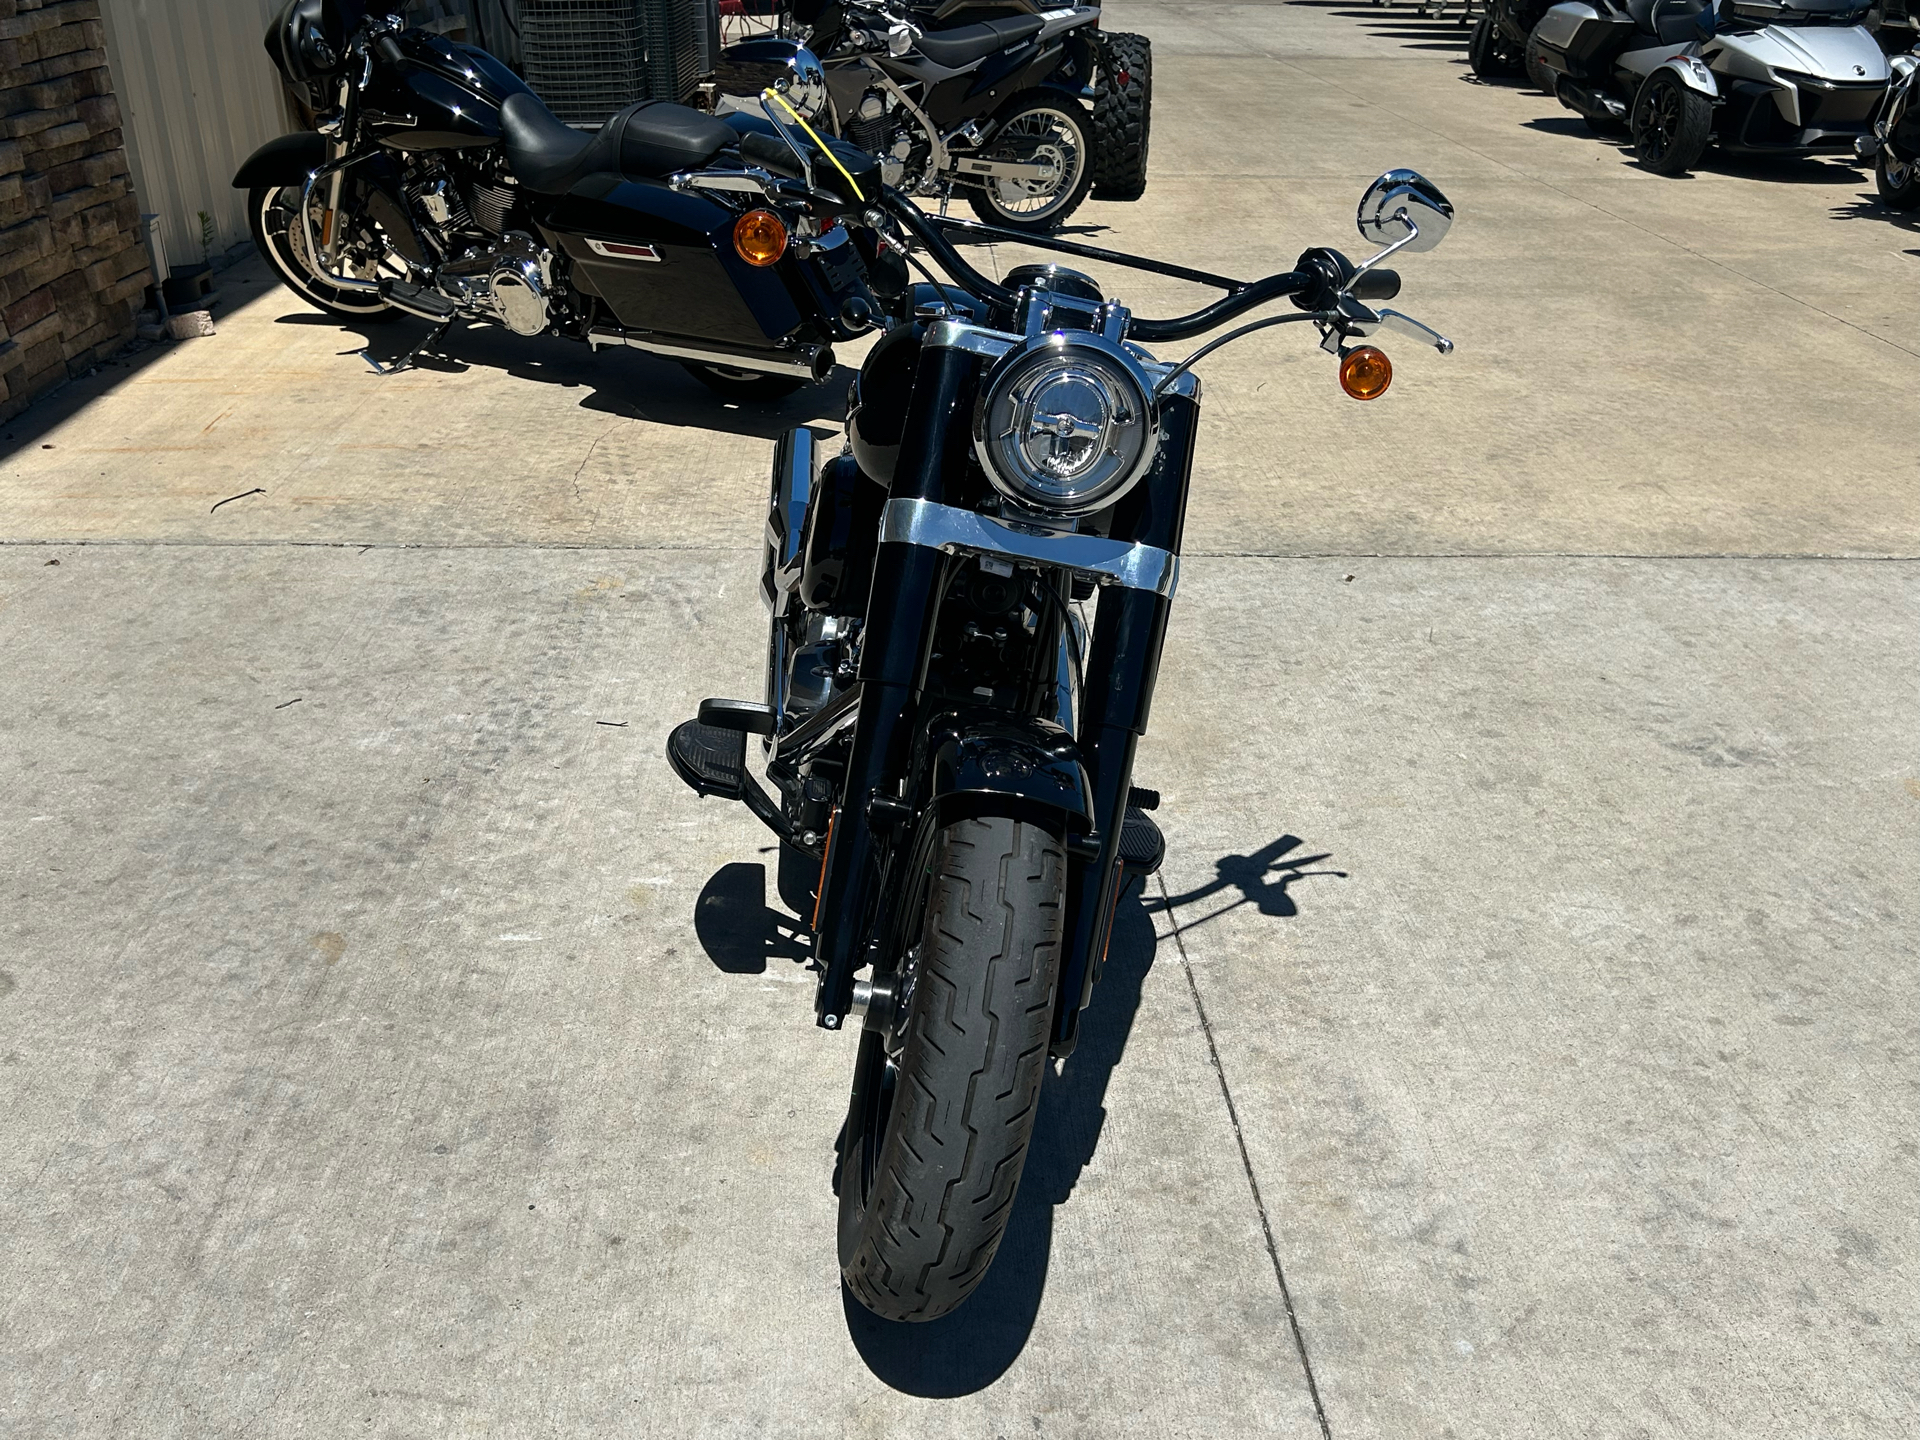 2021 Harley-Davidson Softail Slim® in Columbia, Missouri - Photo 3